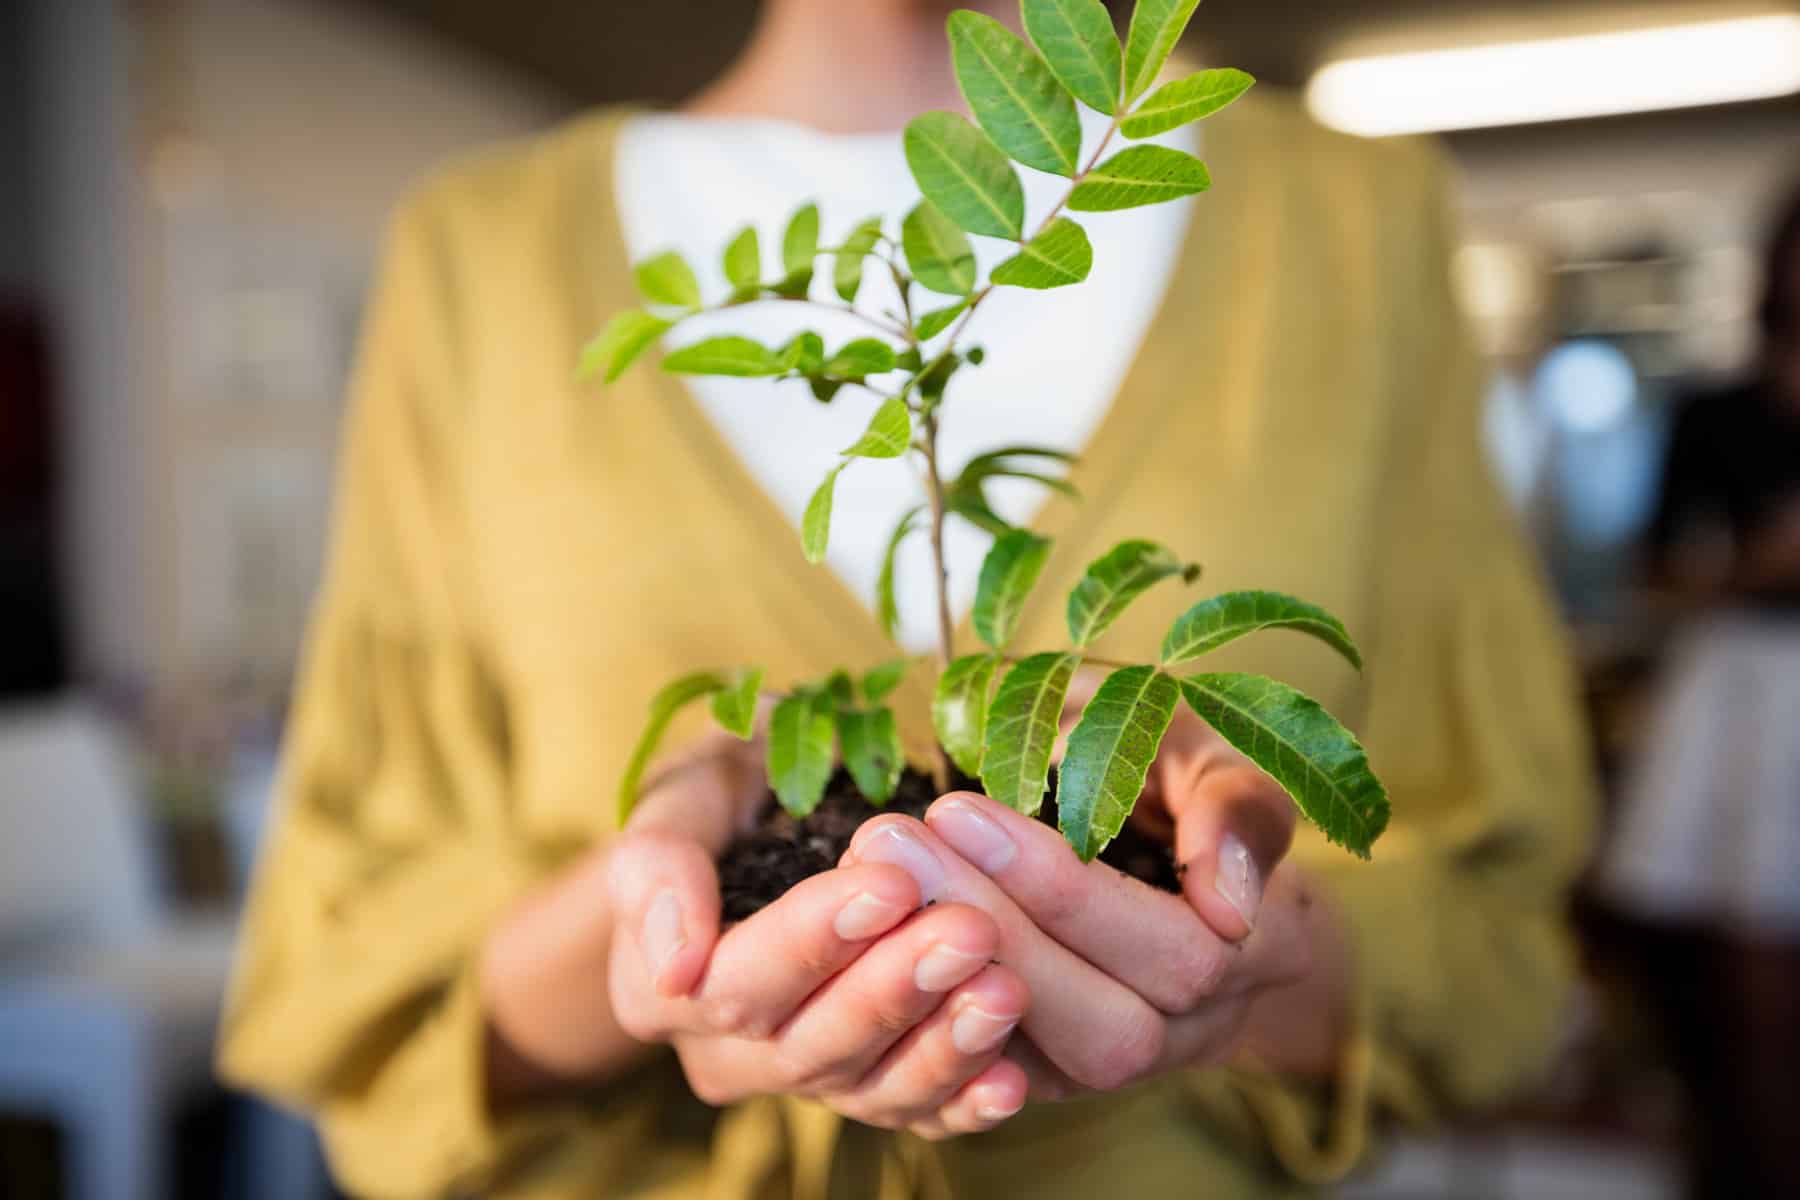 how long do coffee plants take to grow?